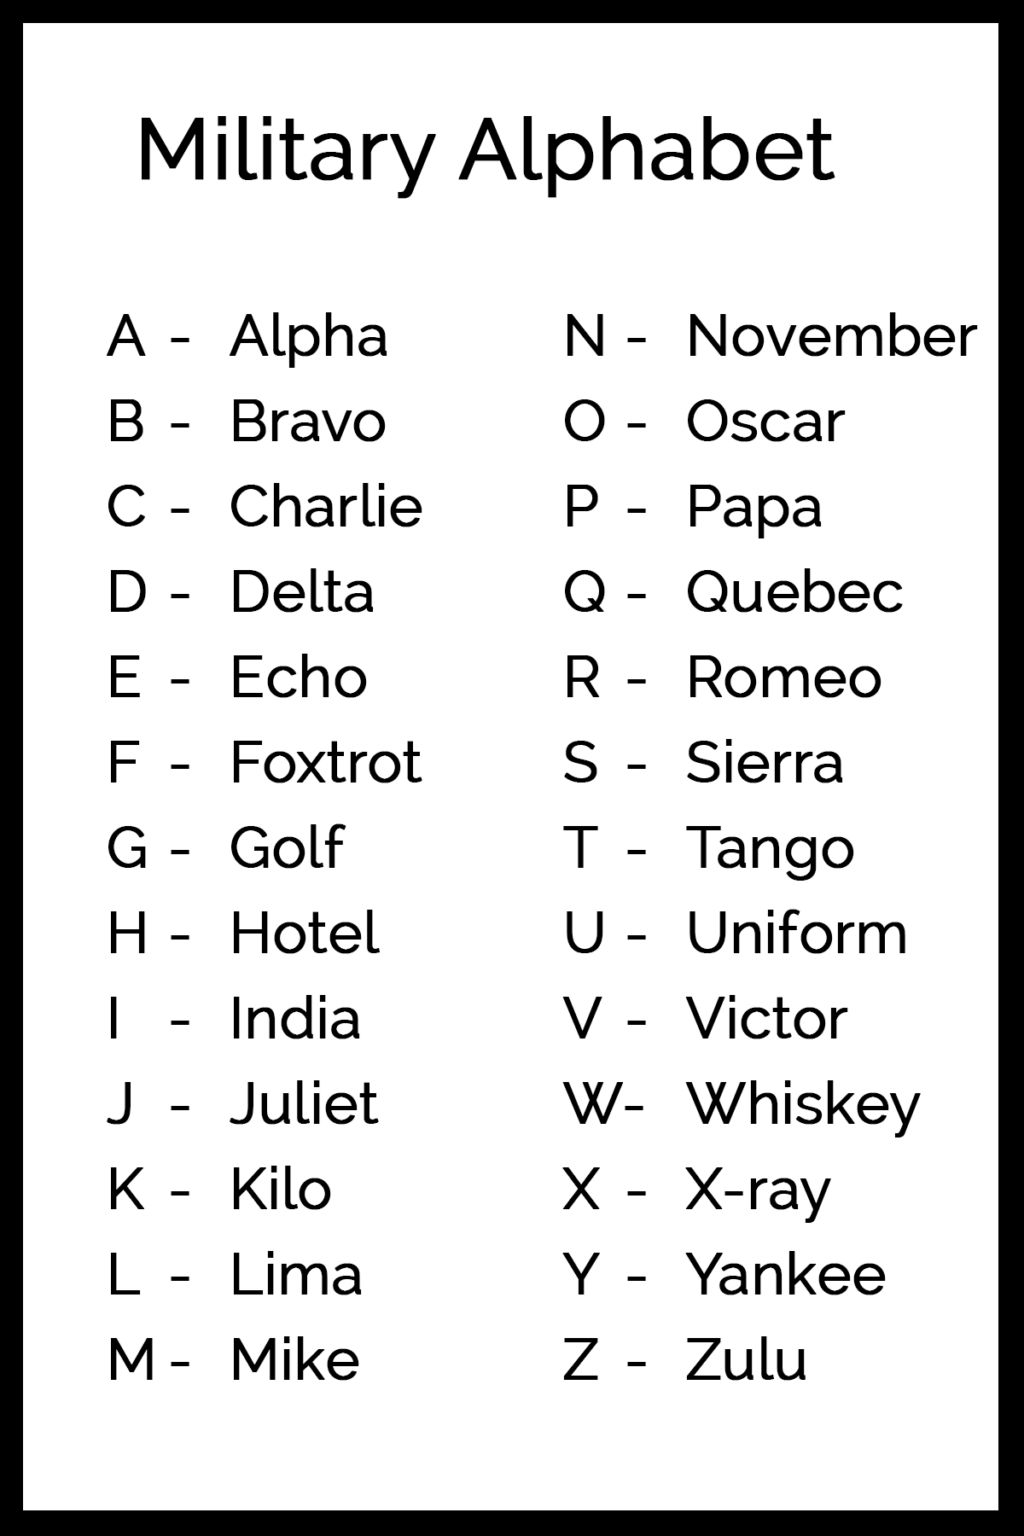 types-of-military-alphabet-code-military-alphabet